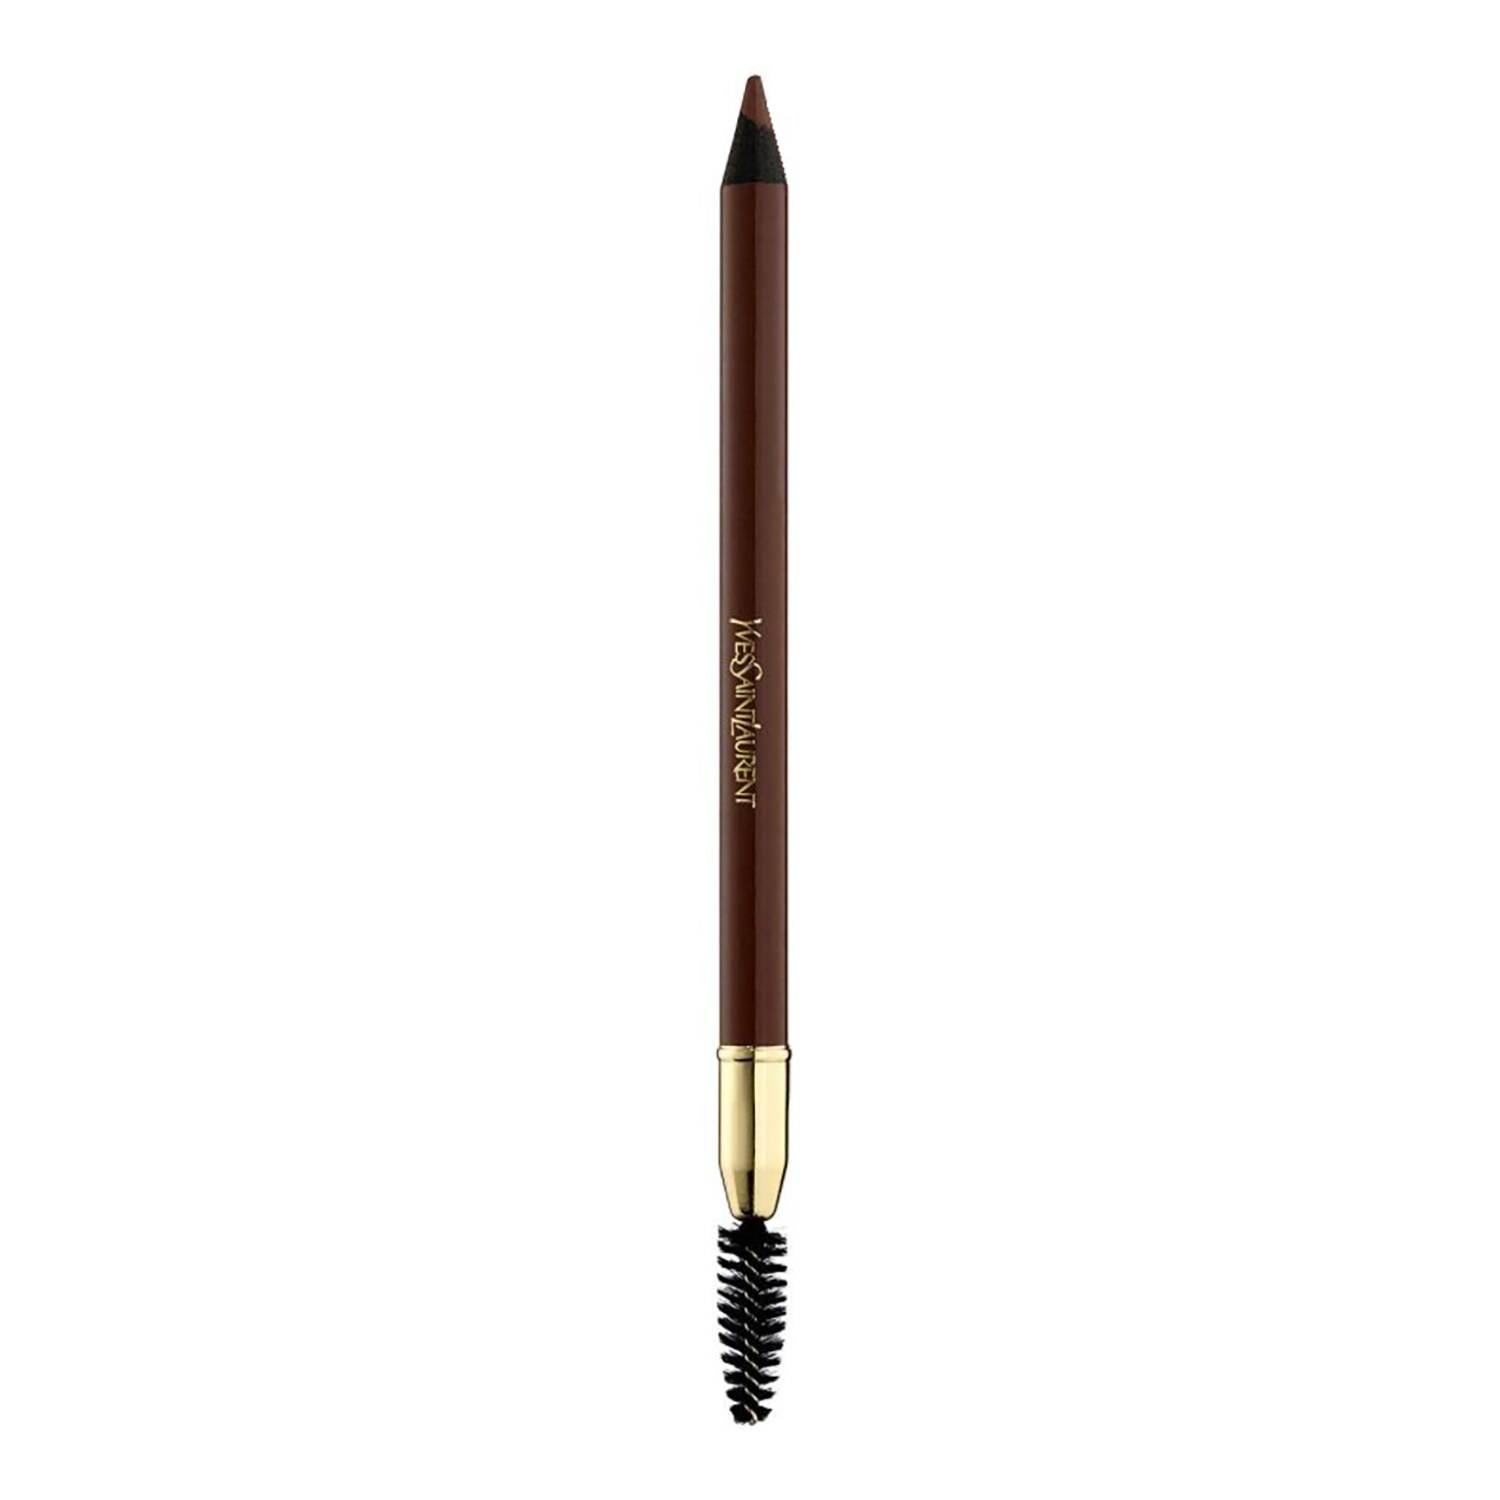 Ysl Beauty Eyebrow Pencil 1.3G 02 Dark Brown